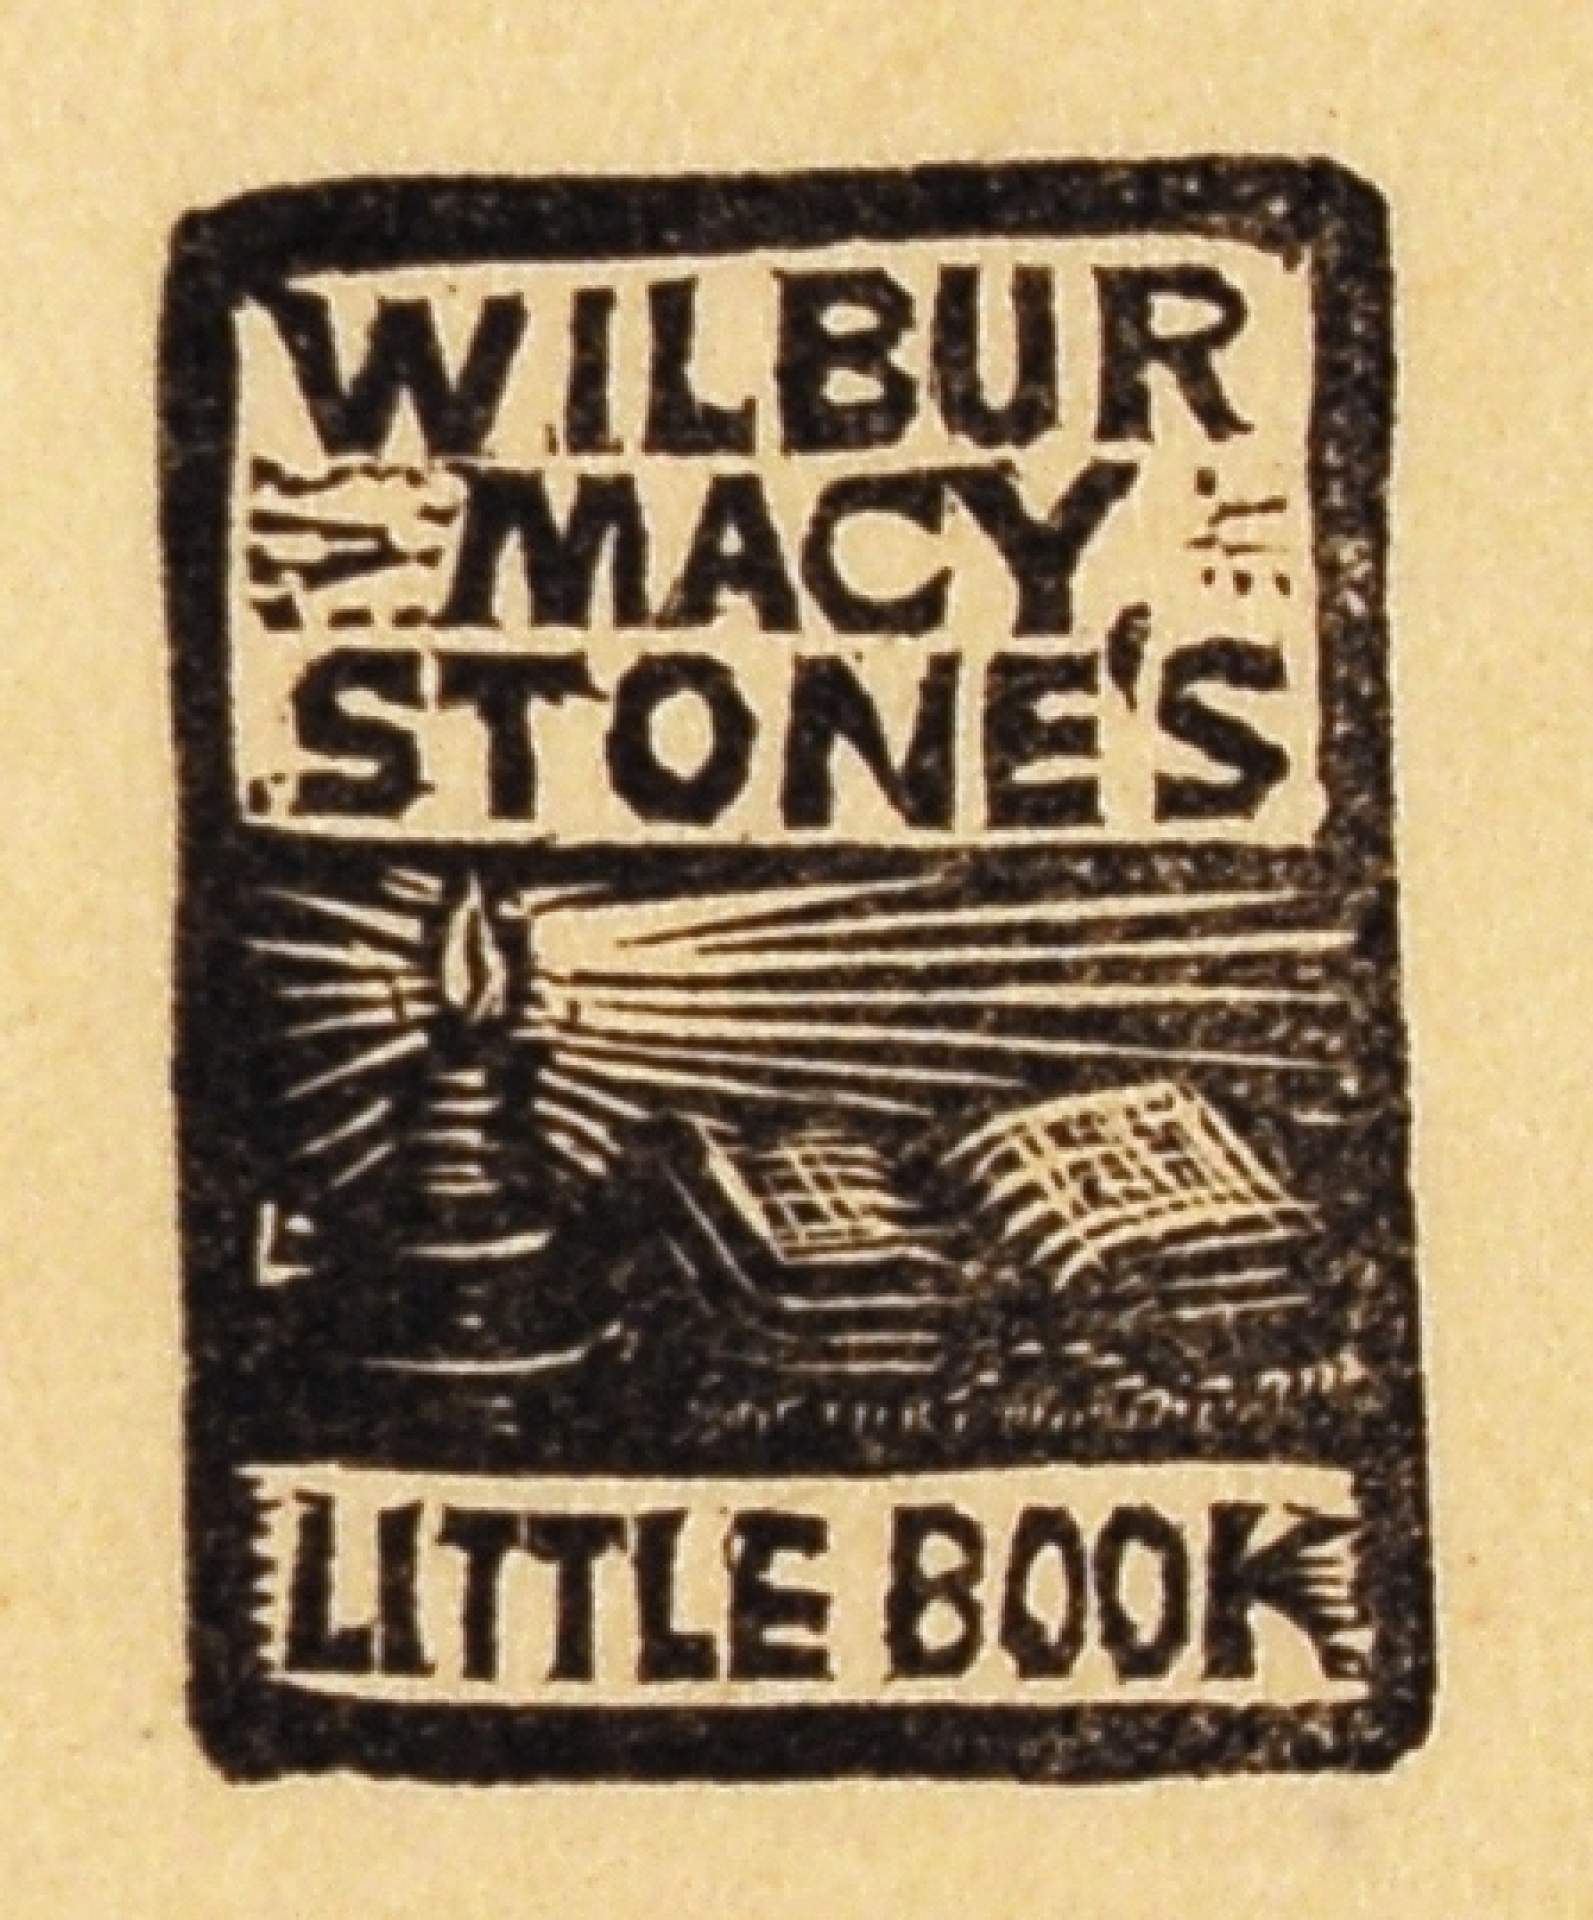 Wilbur Macy Stone's Little Book [Bookplate]